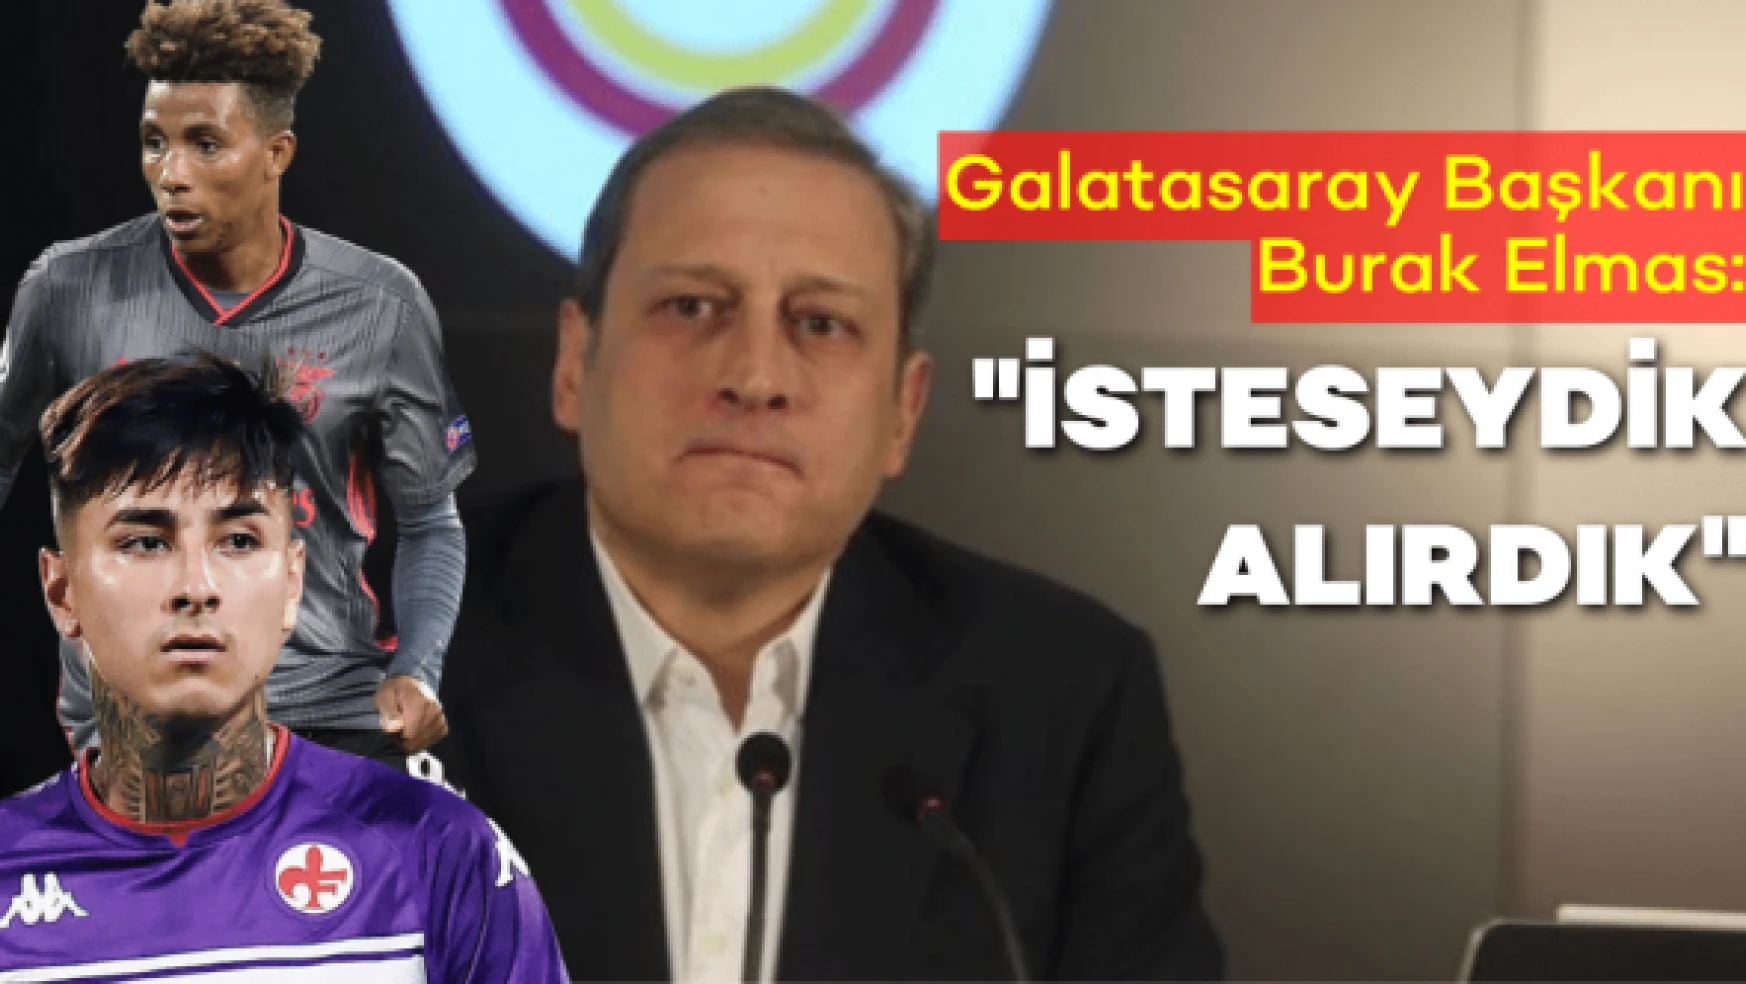 Galatasaray Başkanı Elmas: "İsteseydik alırdık!